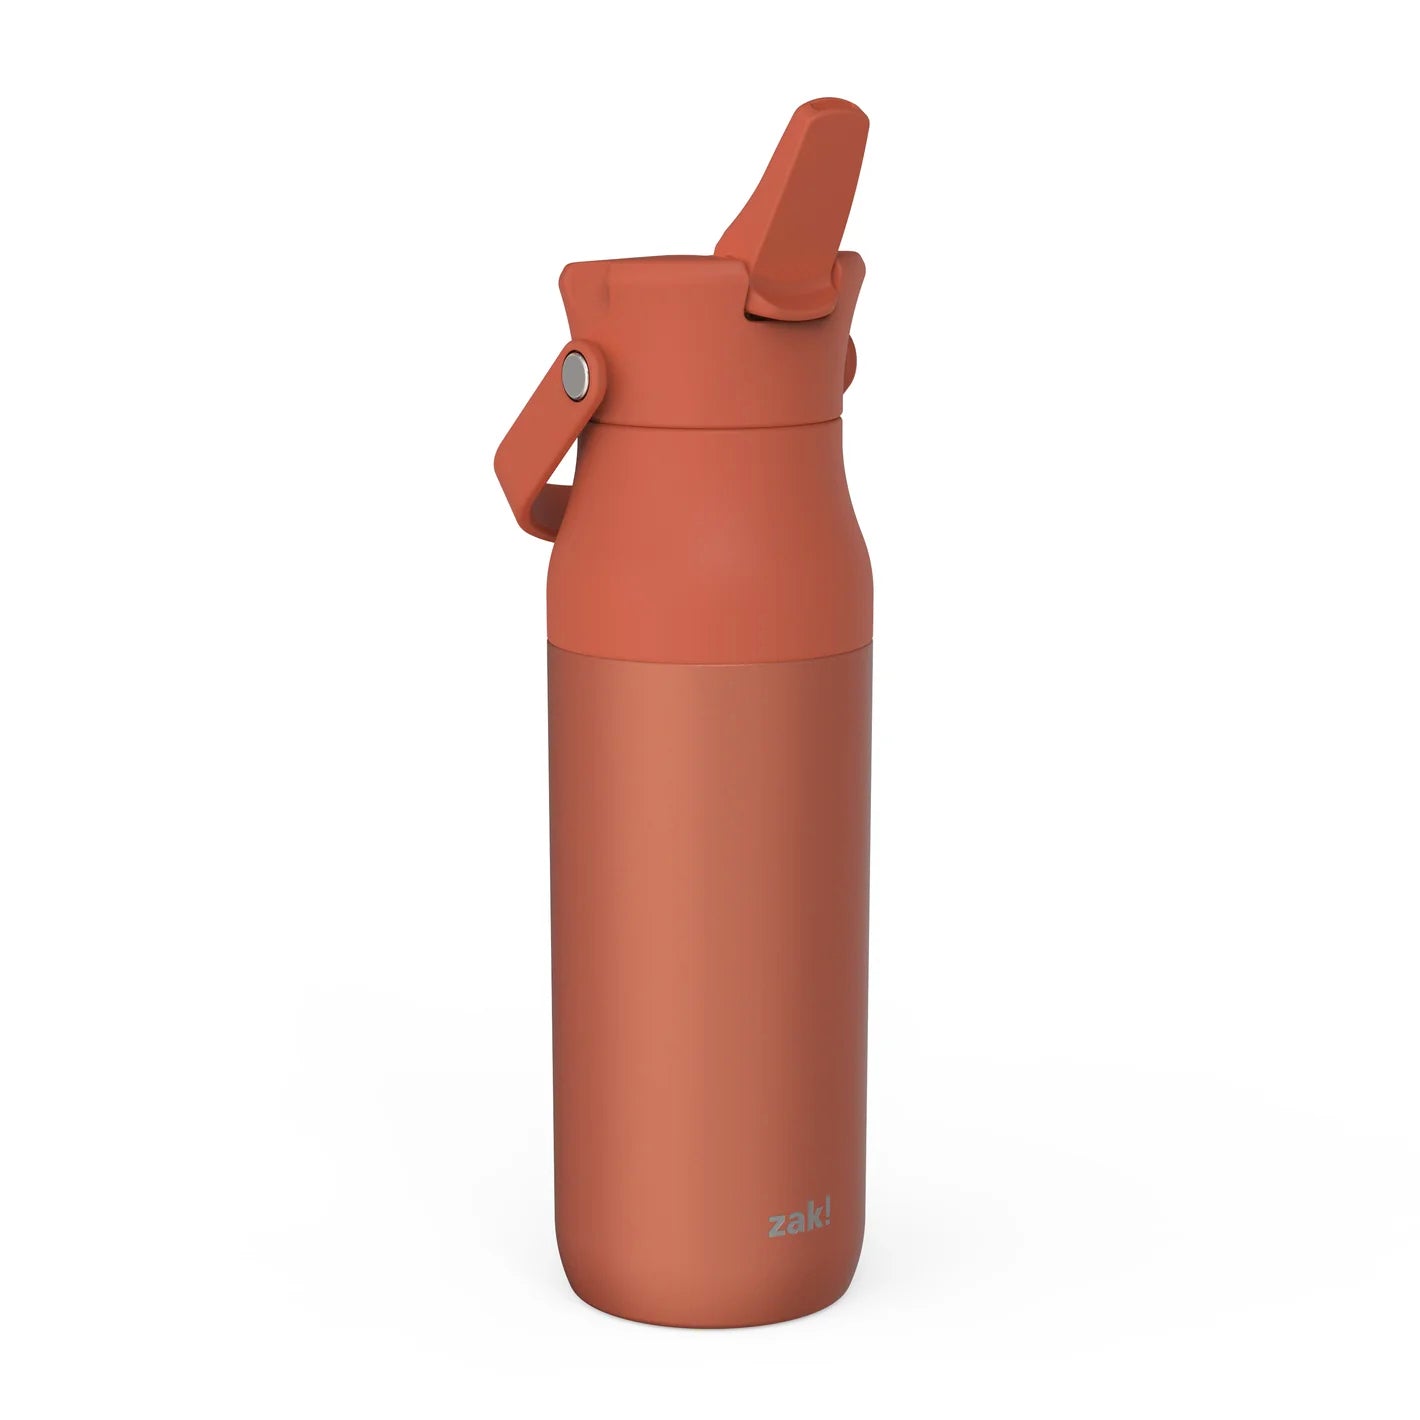 Drinkware - 32 oz. Steel Double-wall Vacuum Insulated Flask (Flip